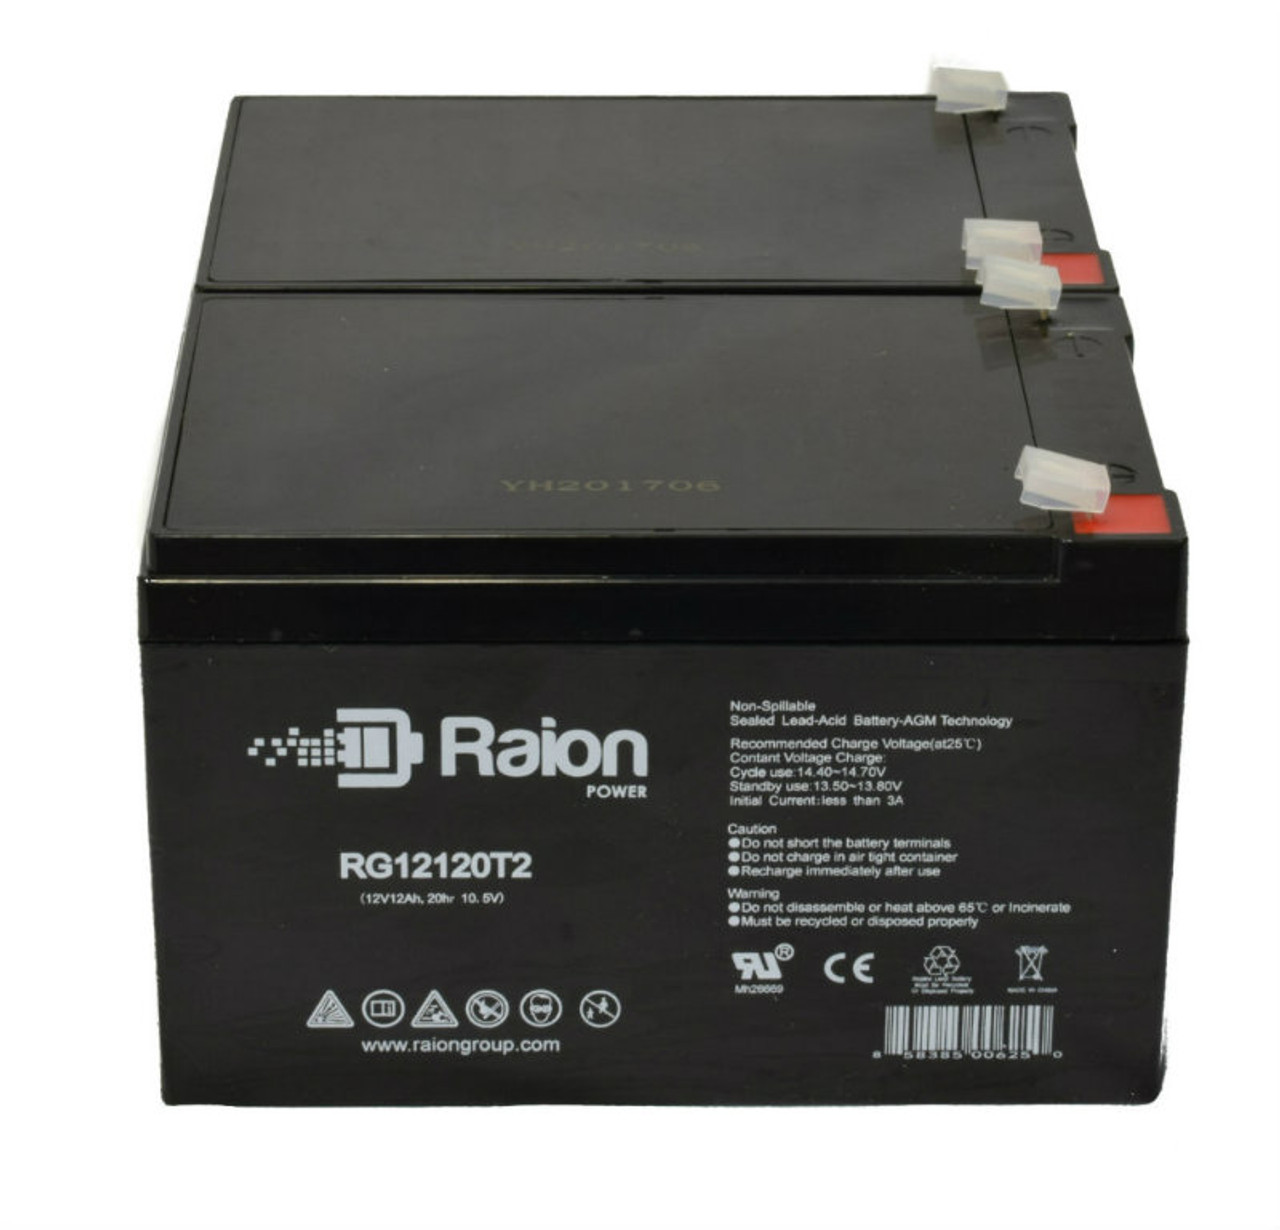 Raion Power RG12120T2 12V 12Ah Replacement UPS Battery for APC Smart-UPS 1000VA LCD 120V SMT1000US - 2 Pack